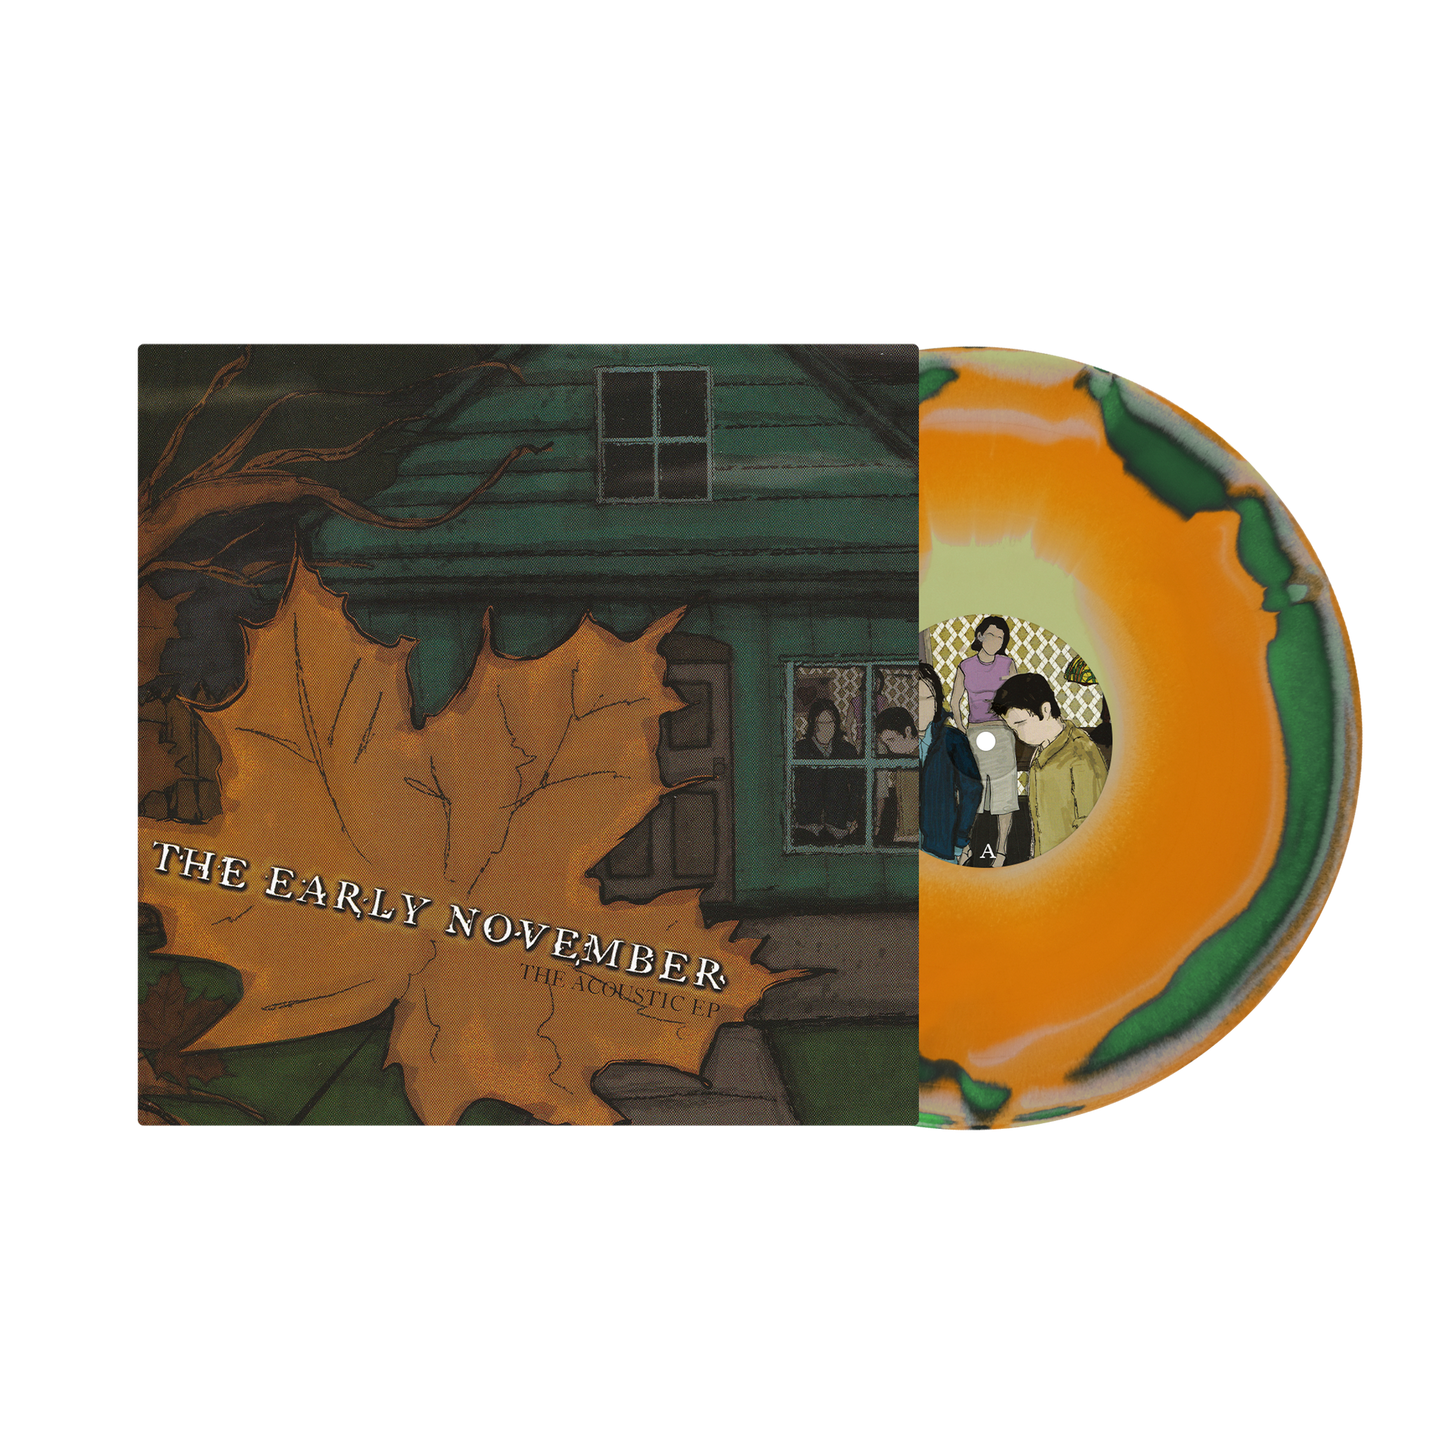 The Early November - “Acoustic EP” Vinyl